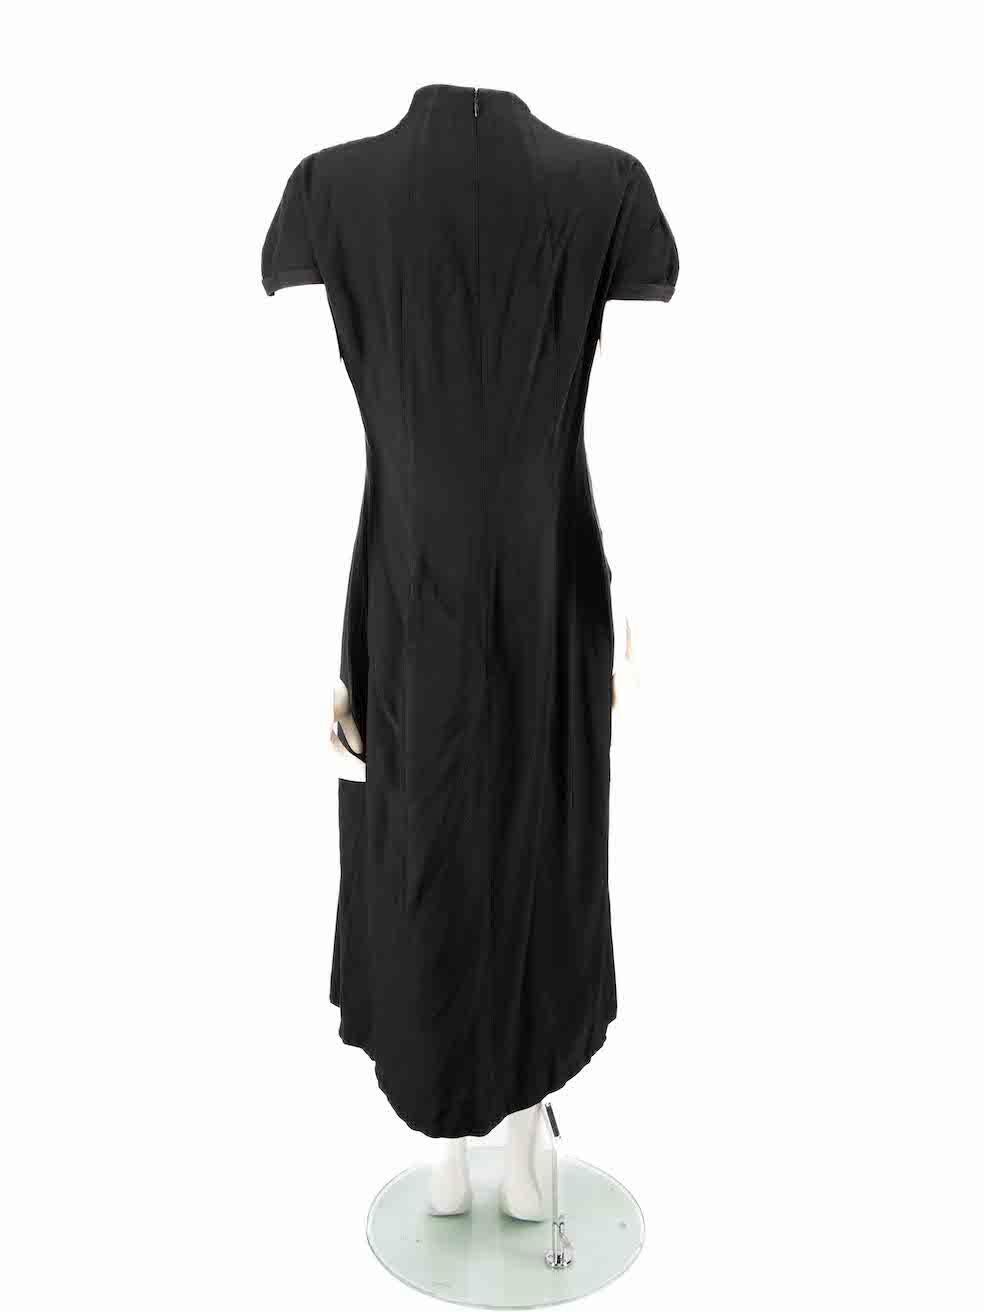 Yohji Yamamoto Black Cap Sleeve Midi Dress Size M In Good Condition For Sale In London, GB